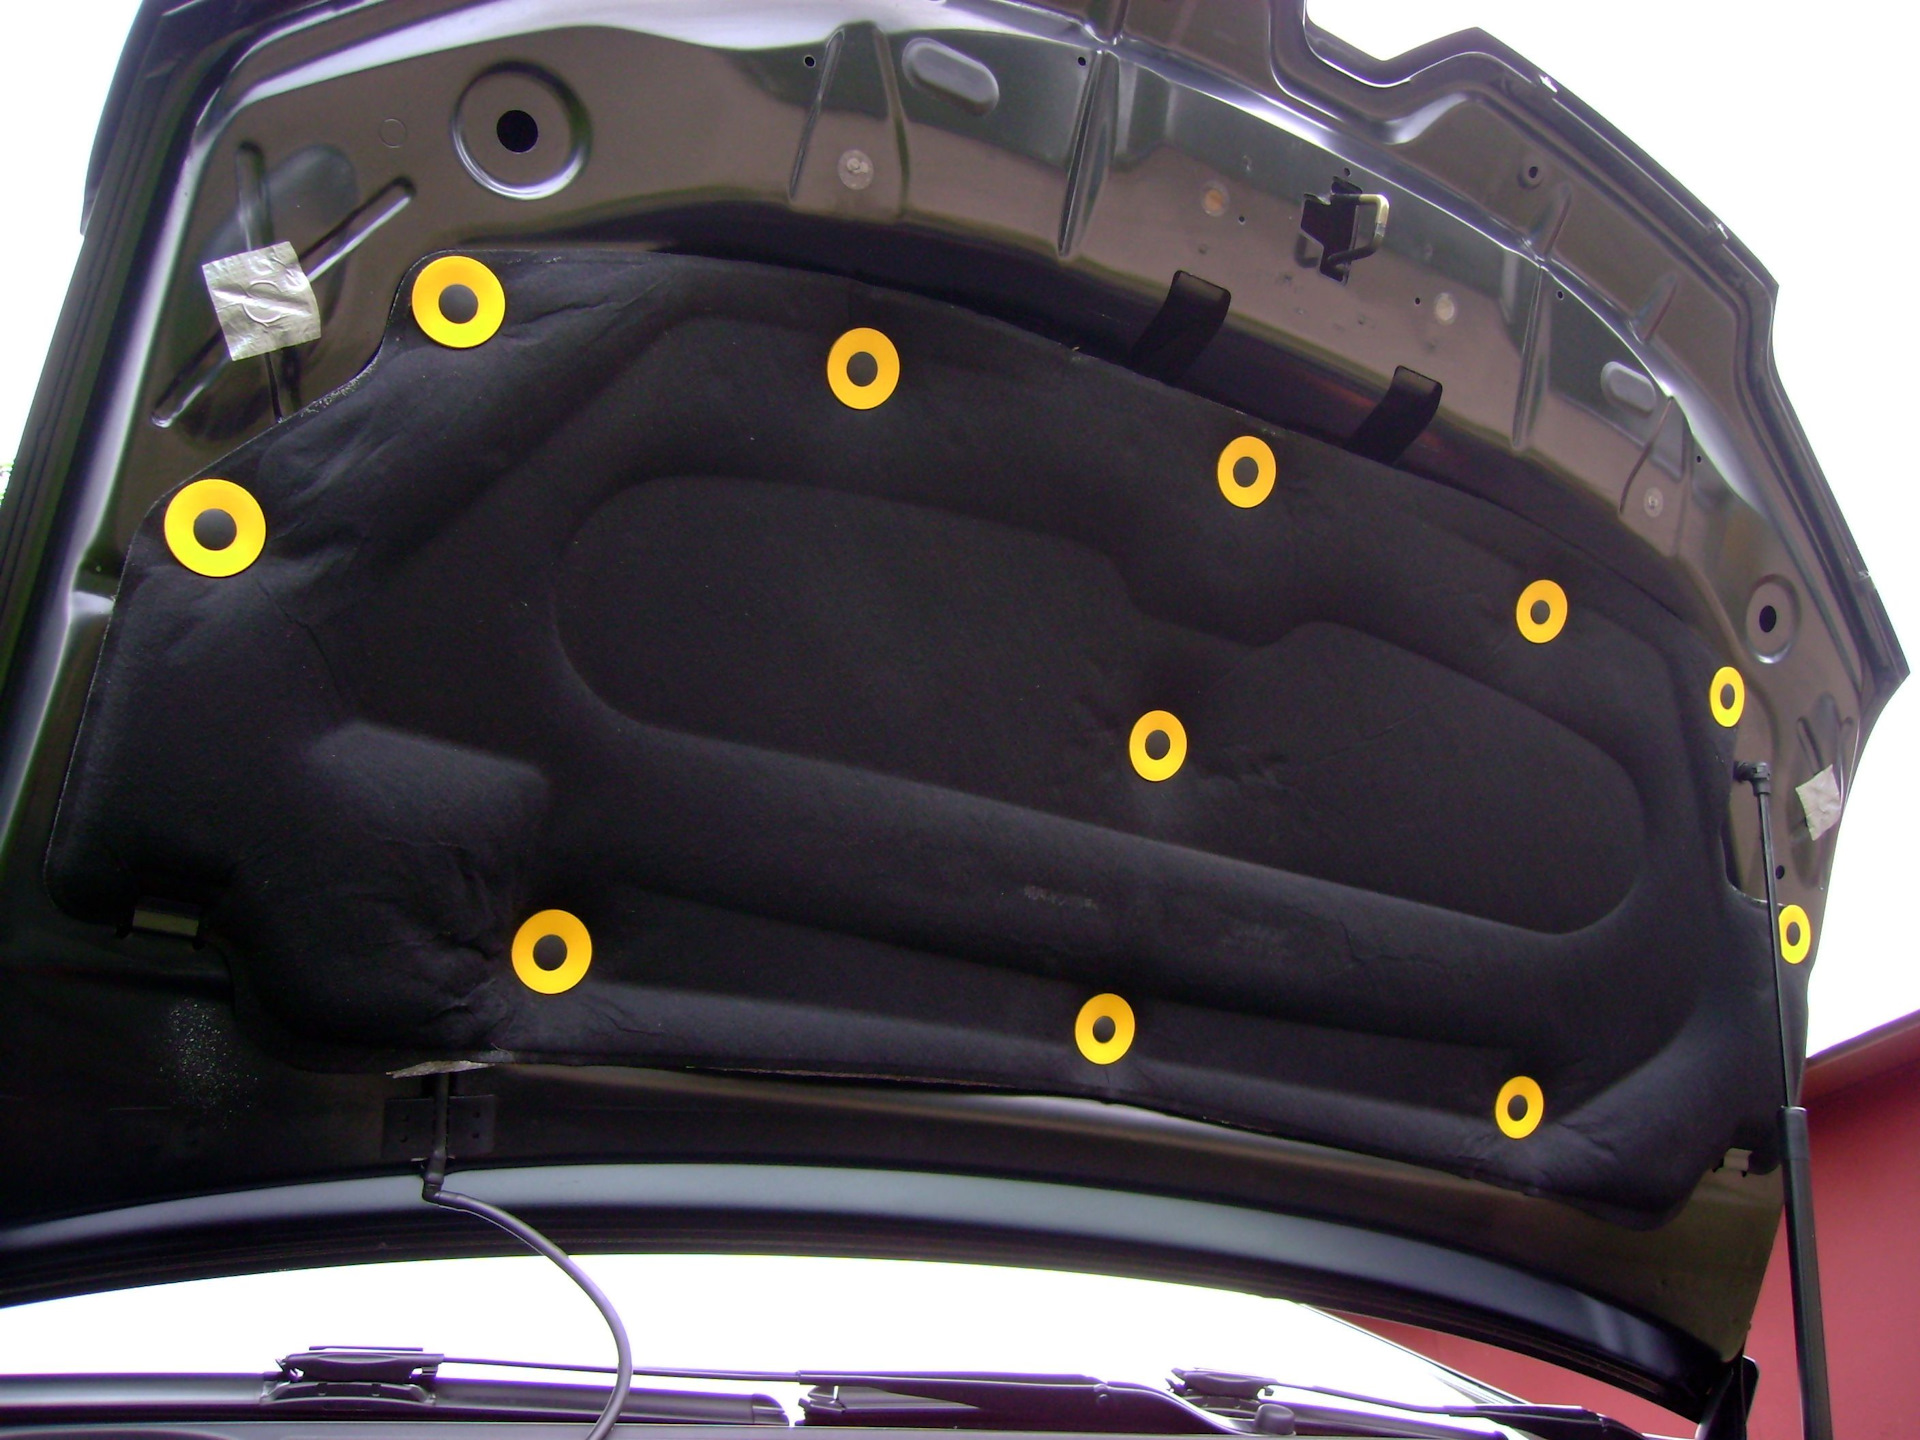 Подушка под капот. Утеплитель капота Рено Сандеро 1. Renault Sandero 2013 обшивка капота. Утеплитель капота Пежо 307. Утеплитель капота Рено Сандеро 2.